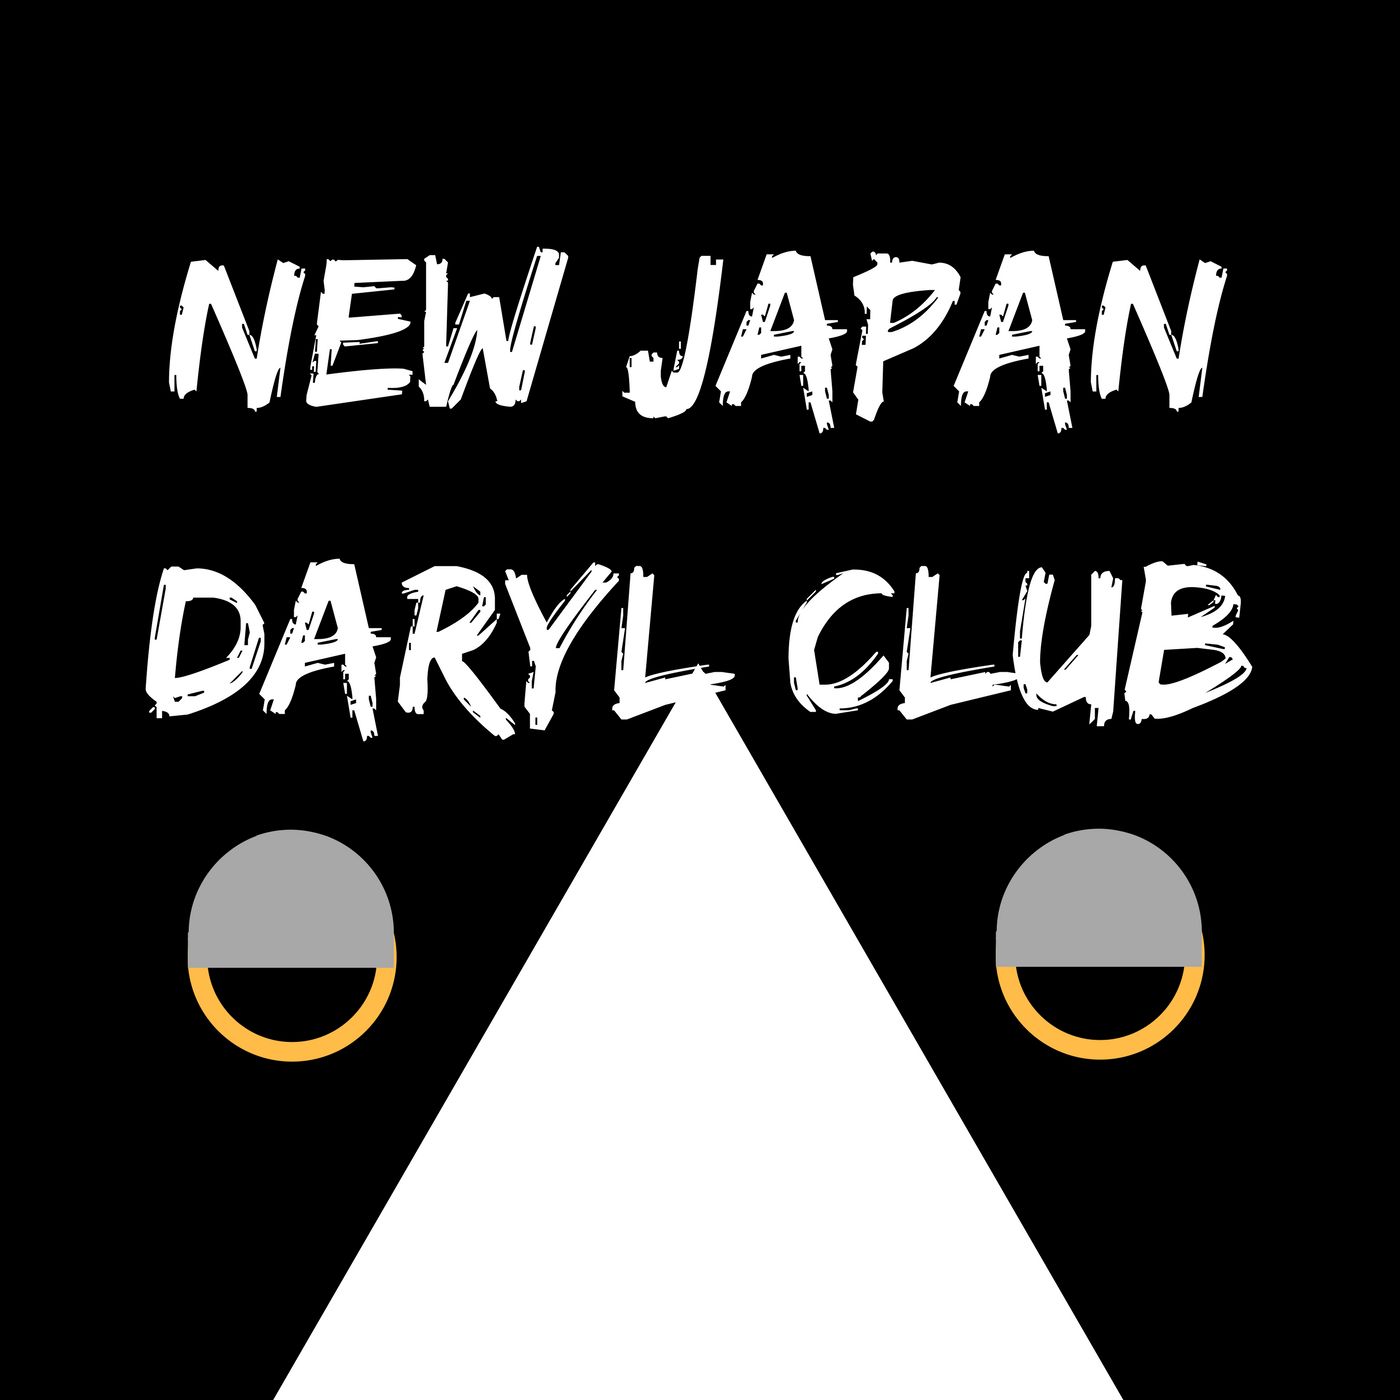 The New Japan Daryl Club